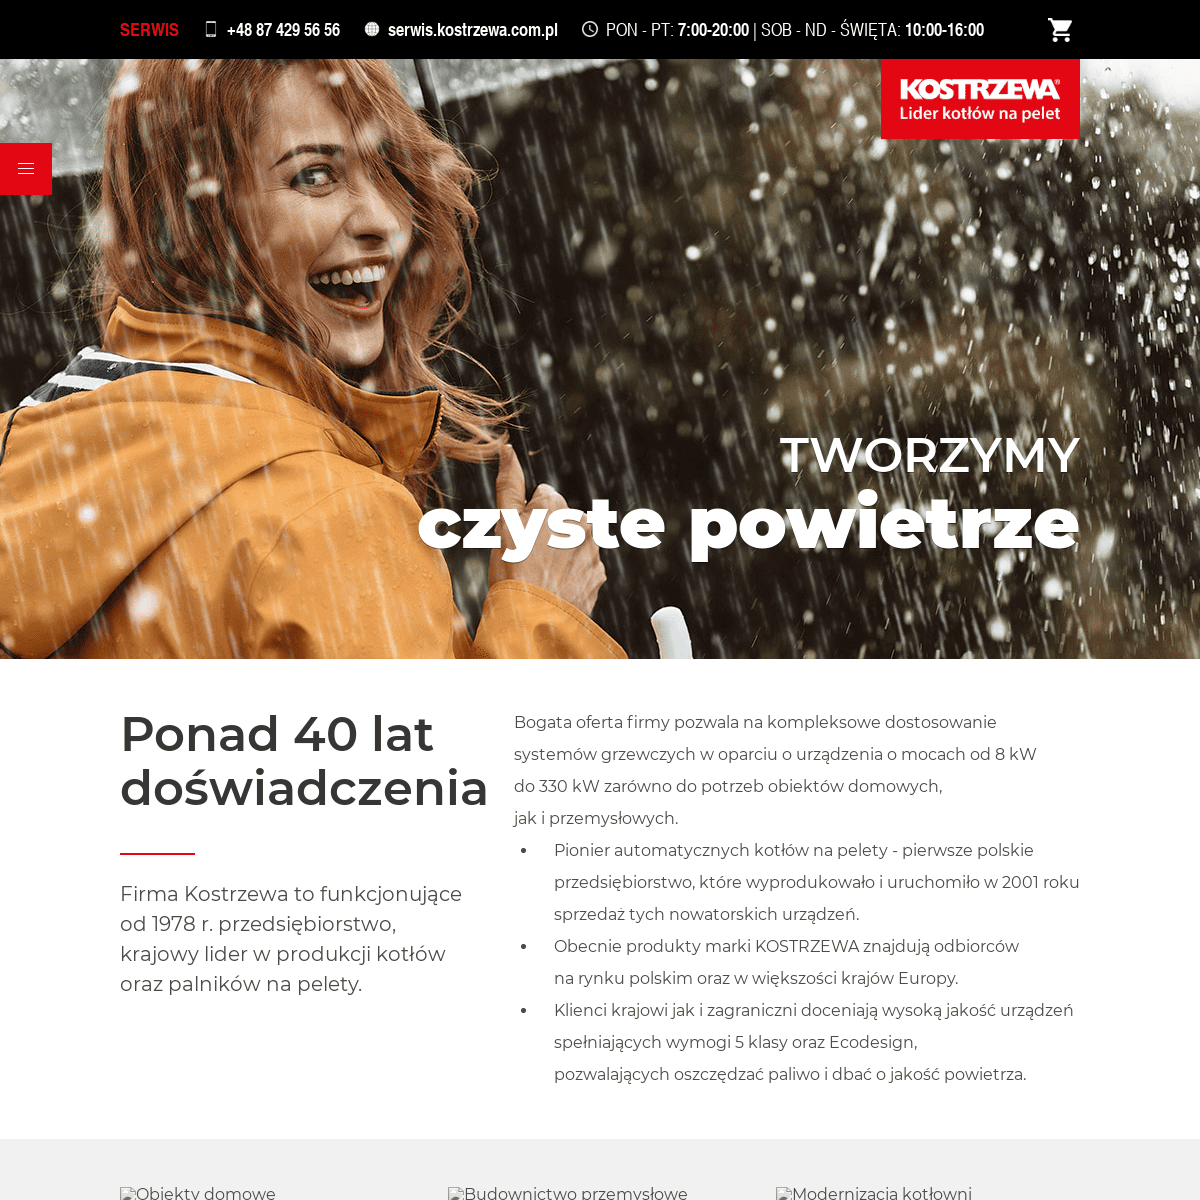 A complete backup of kostrzewa.com.pl